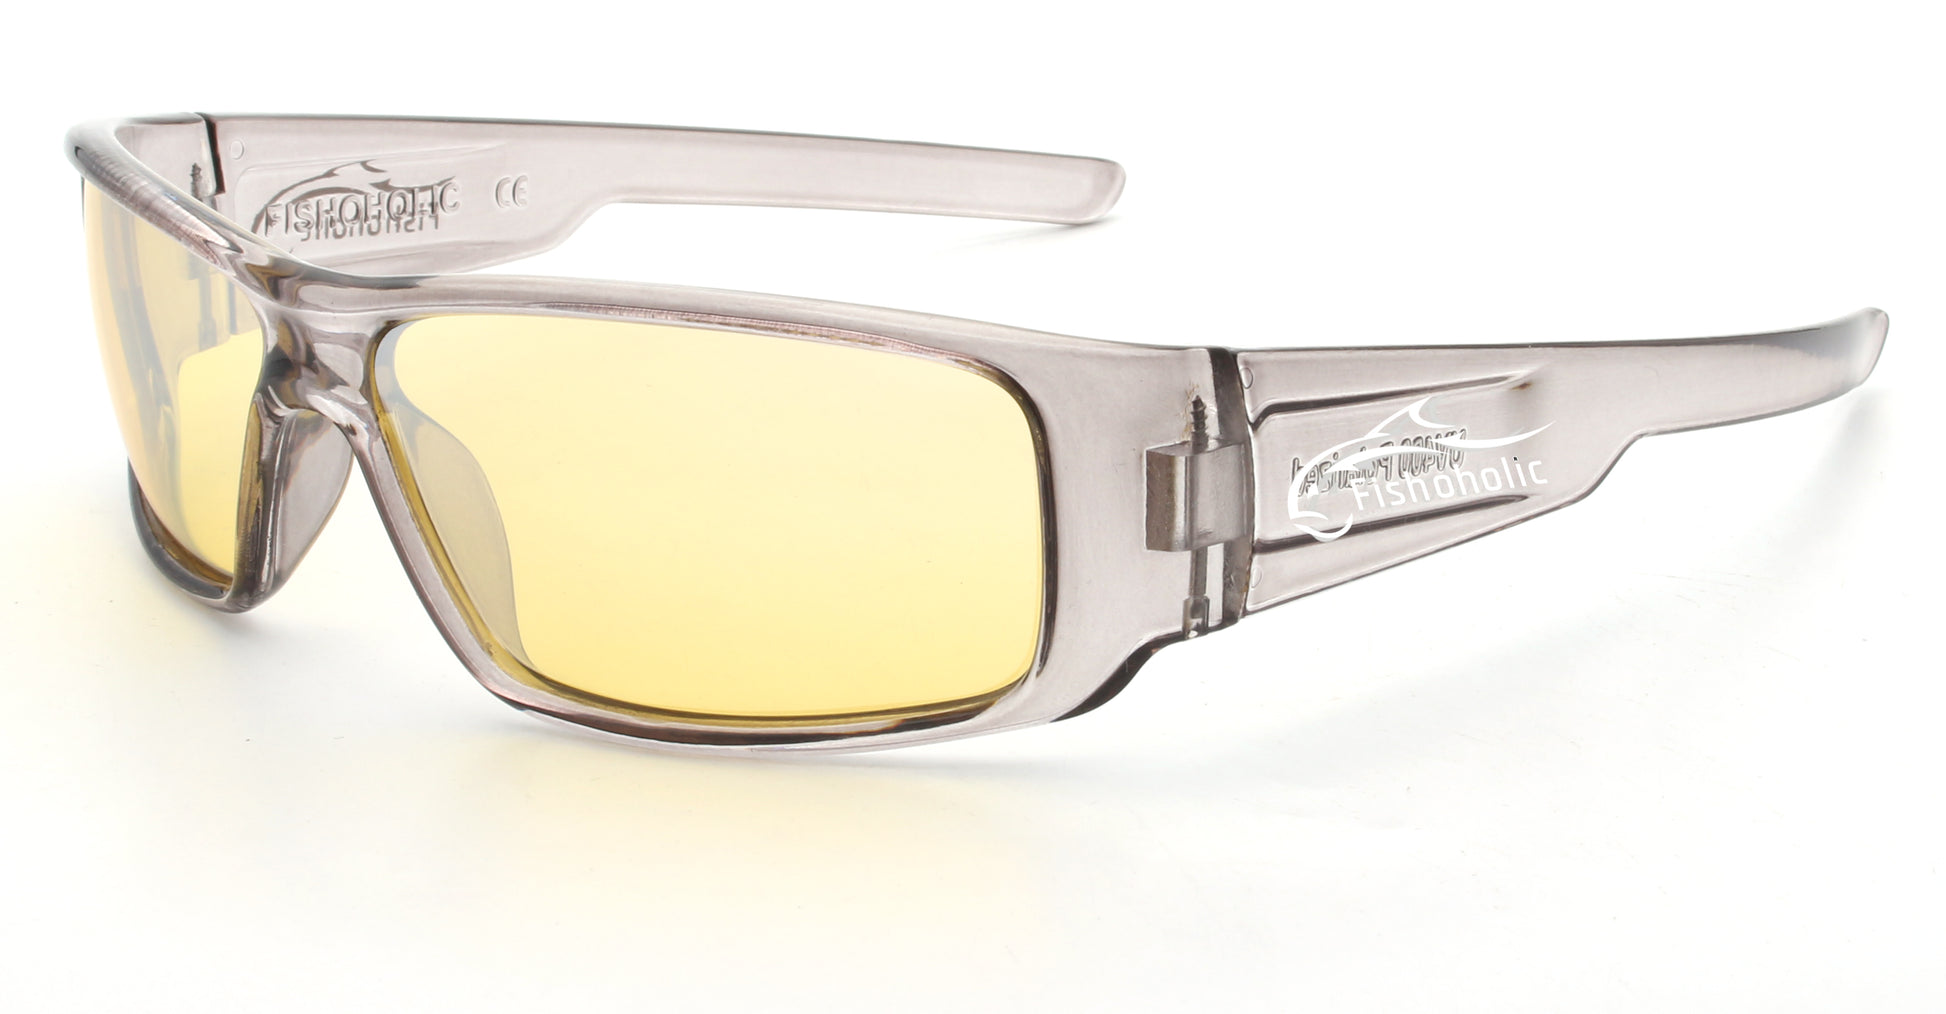 Fishoholic BLAST-OFF Sunglasses - UV400 Polarized Sunglasses w' Case 